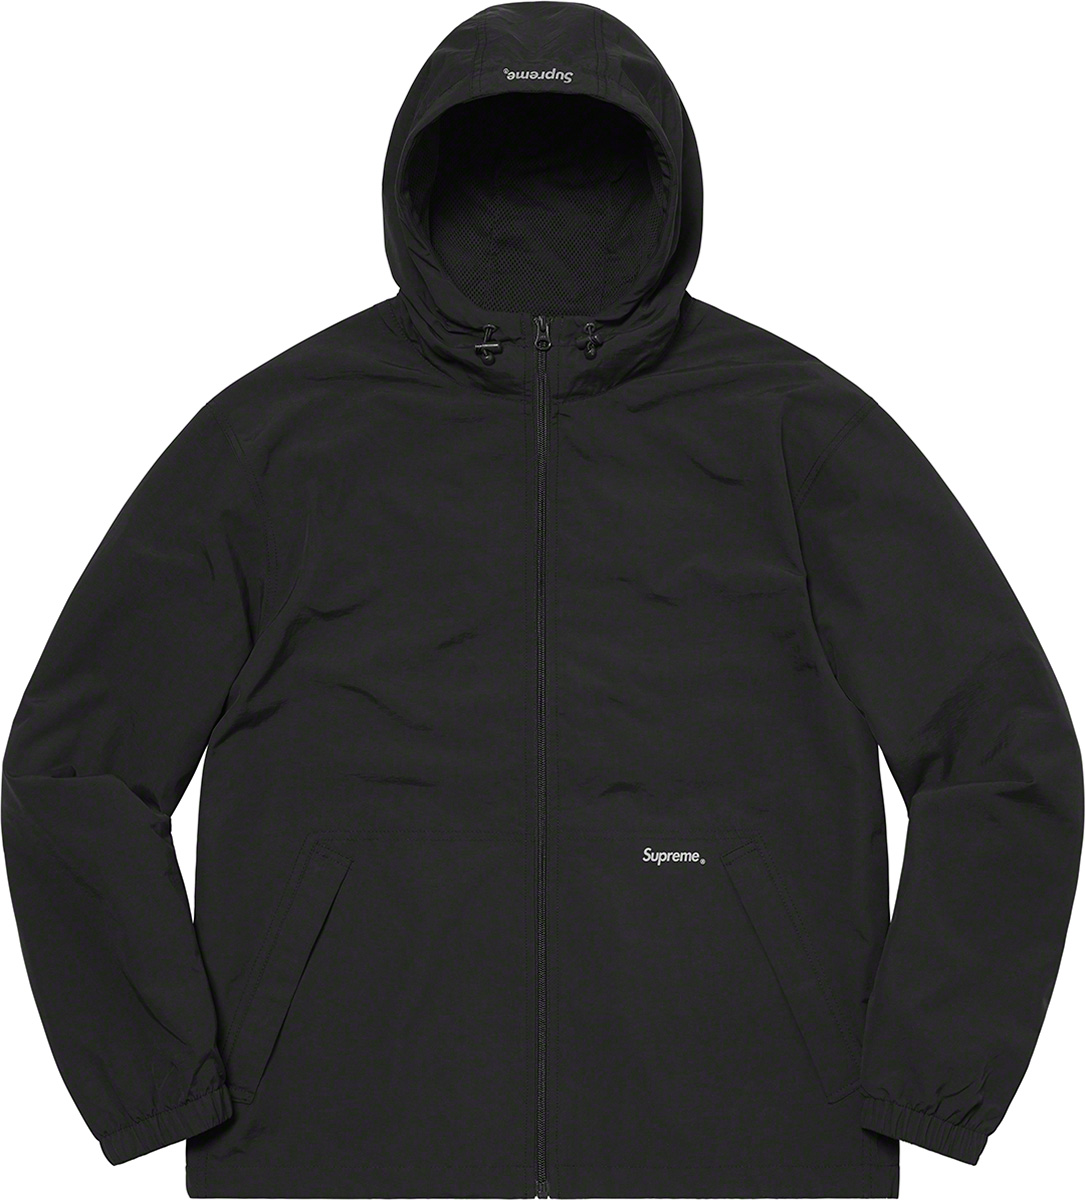 Supreme Reflective Zip Hooded Jacket Black new Zealand, SAVE 54